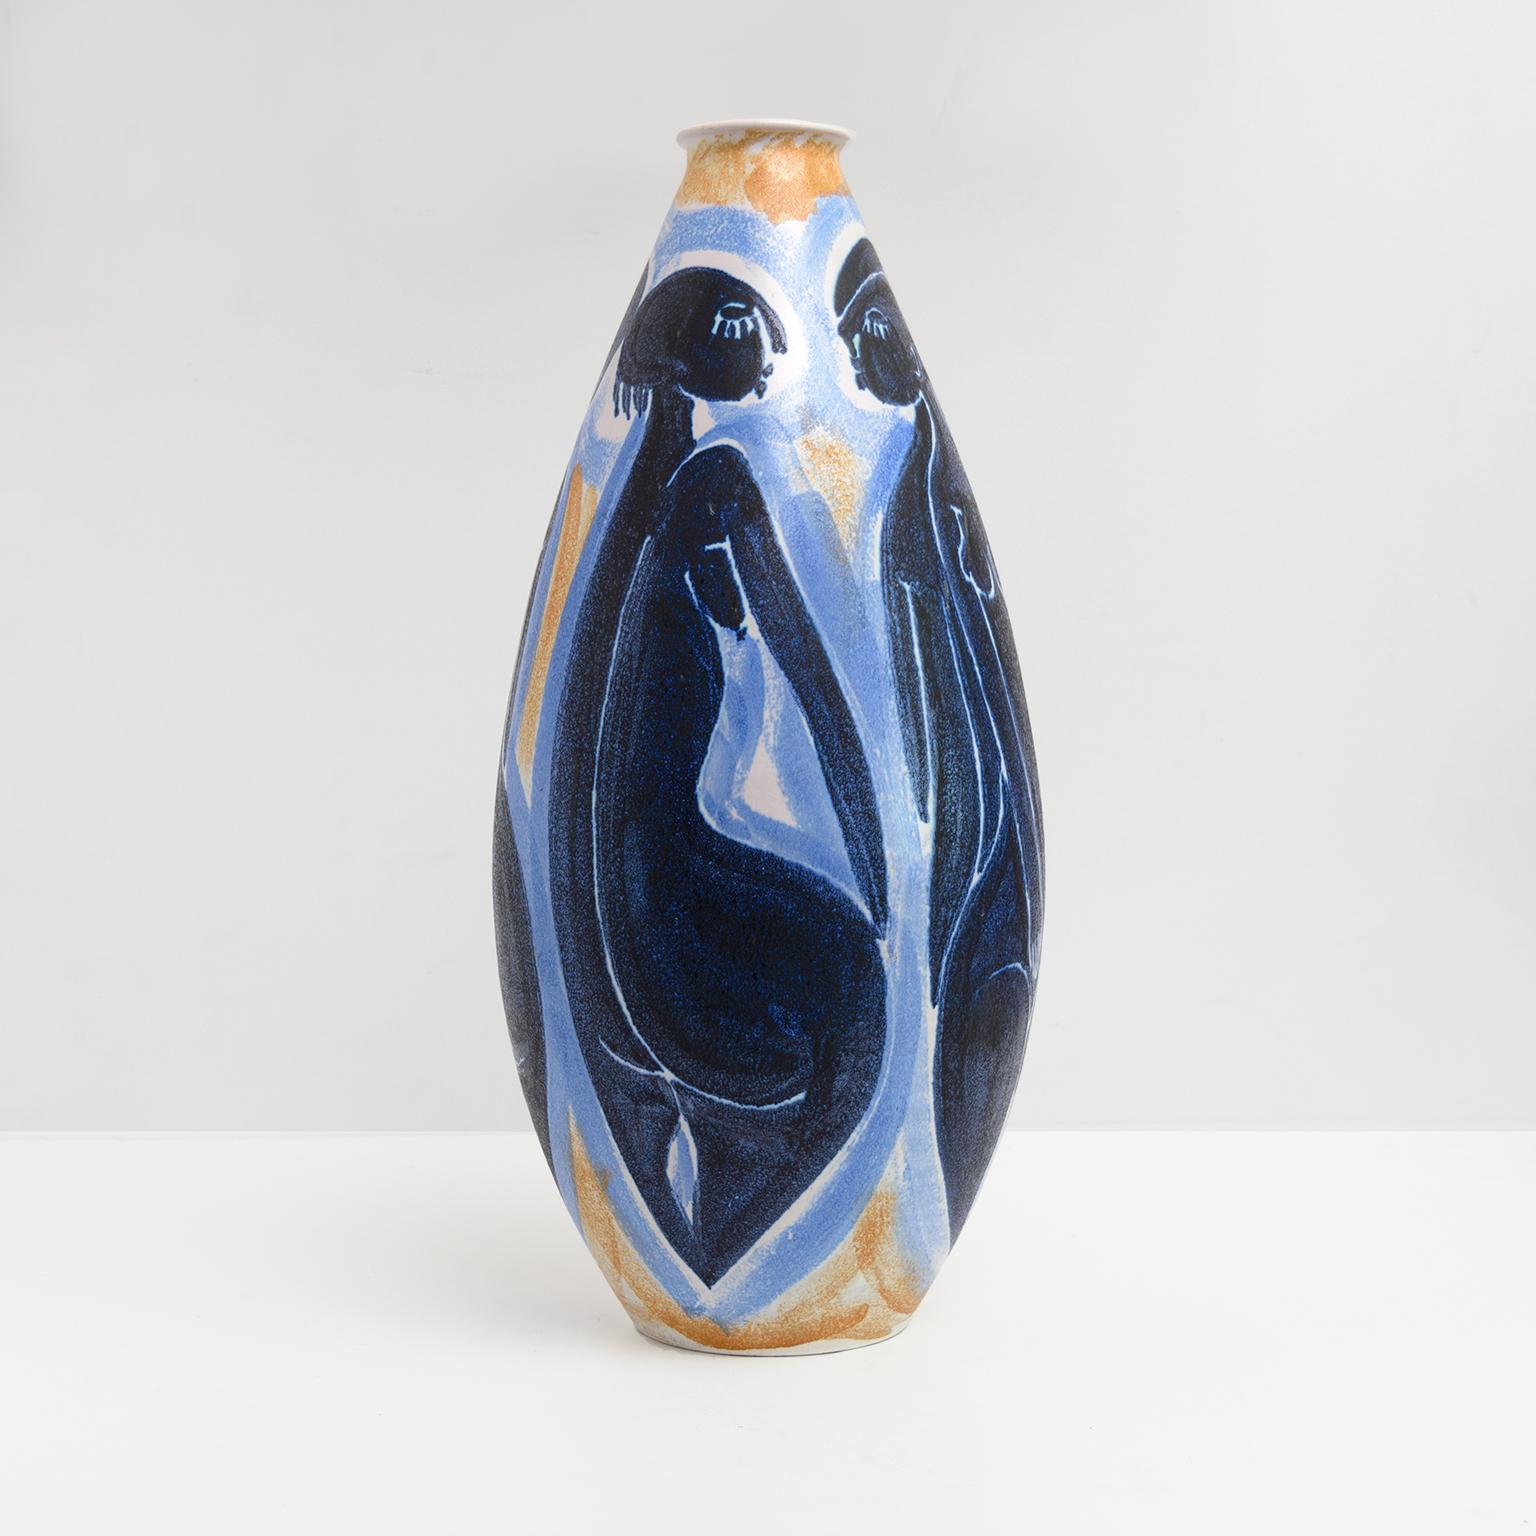 Large Scandinavian modern ceramic vase hand decorated by artist Mette Doller. The Mette Doller and form designed by Ivar Ericsson for Hoganas, Sweden.

Height: 20.5” Diameter 9.5”
